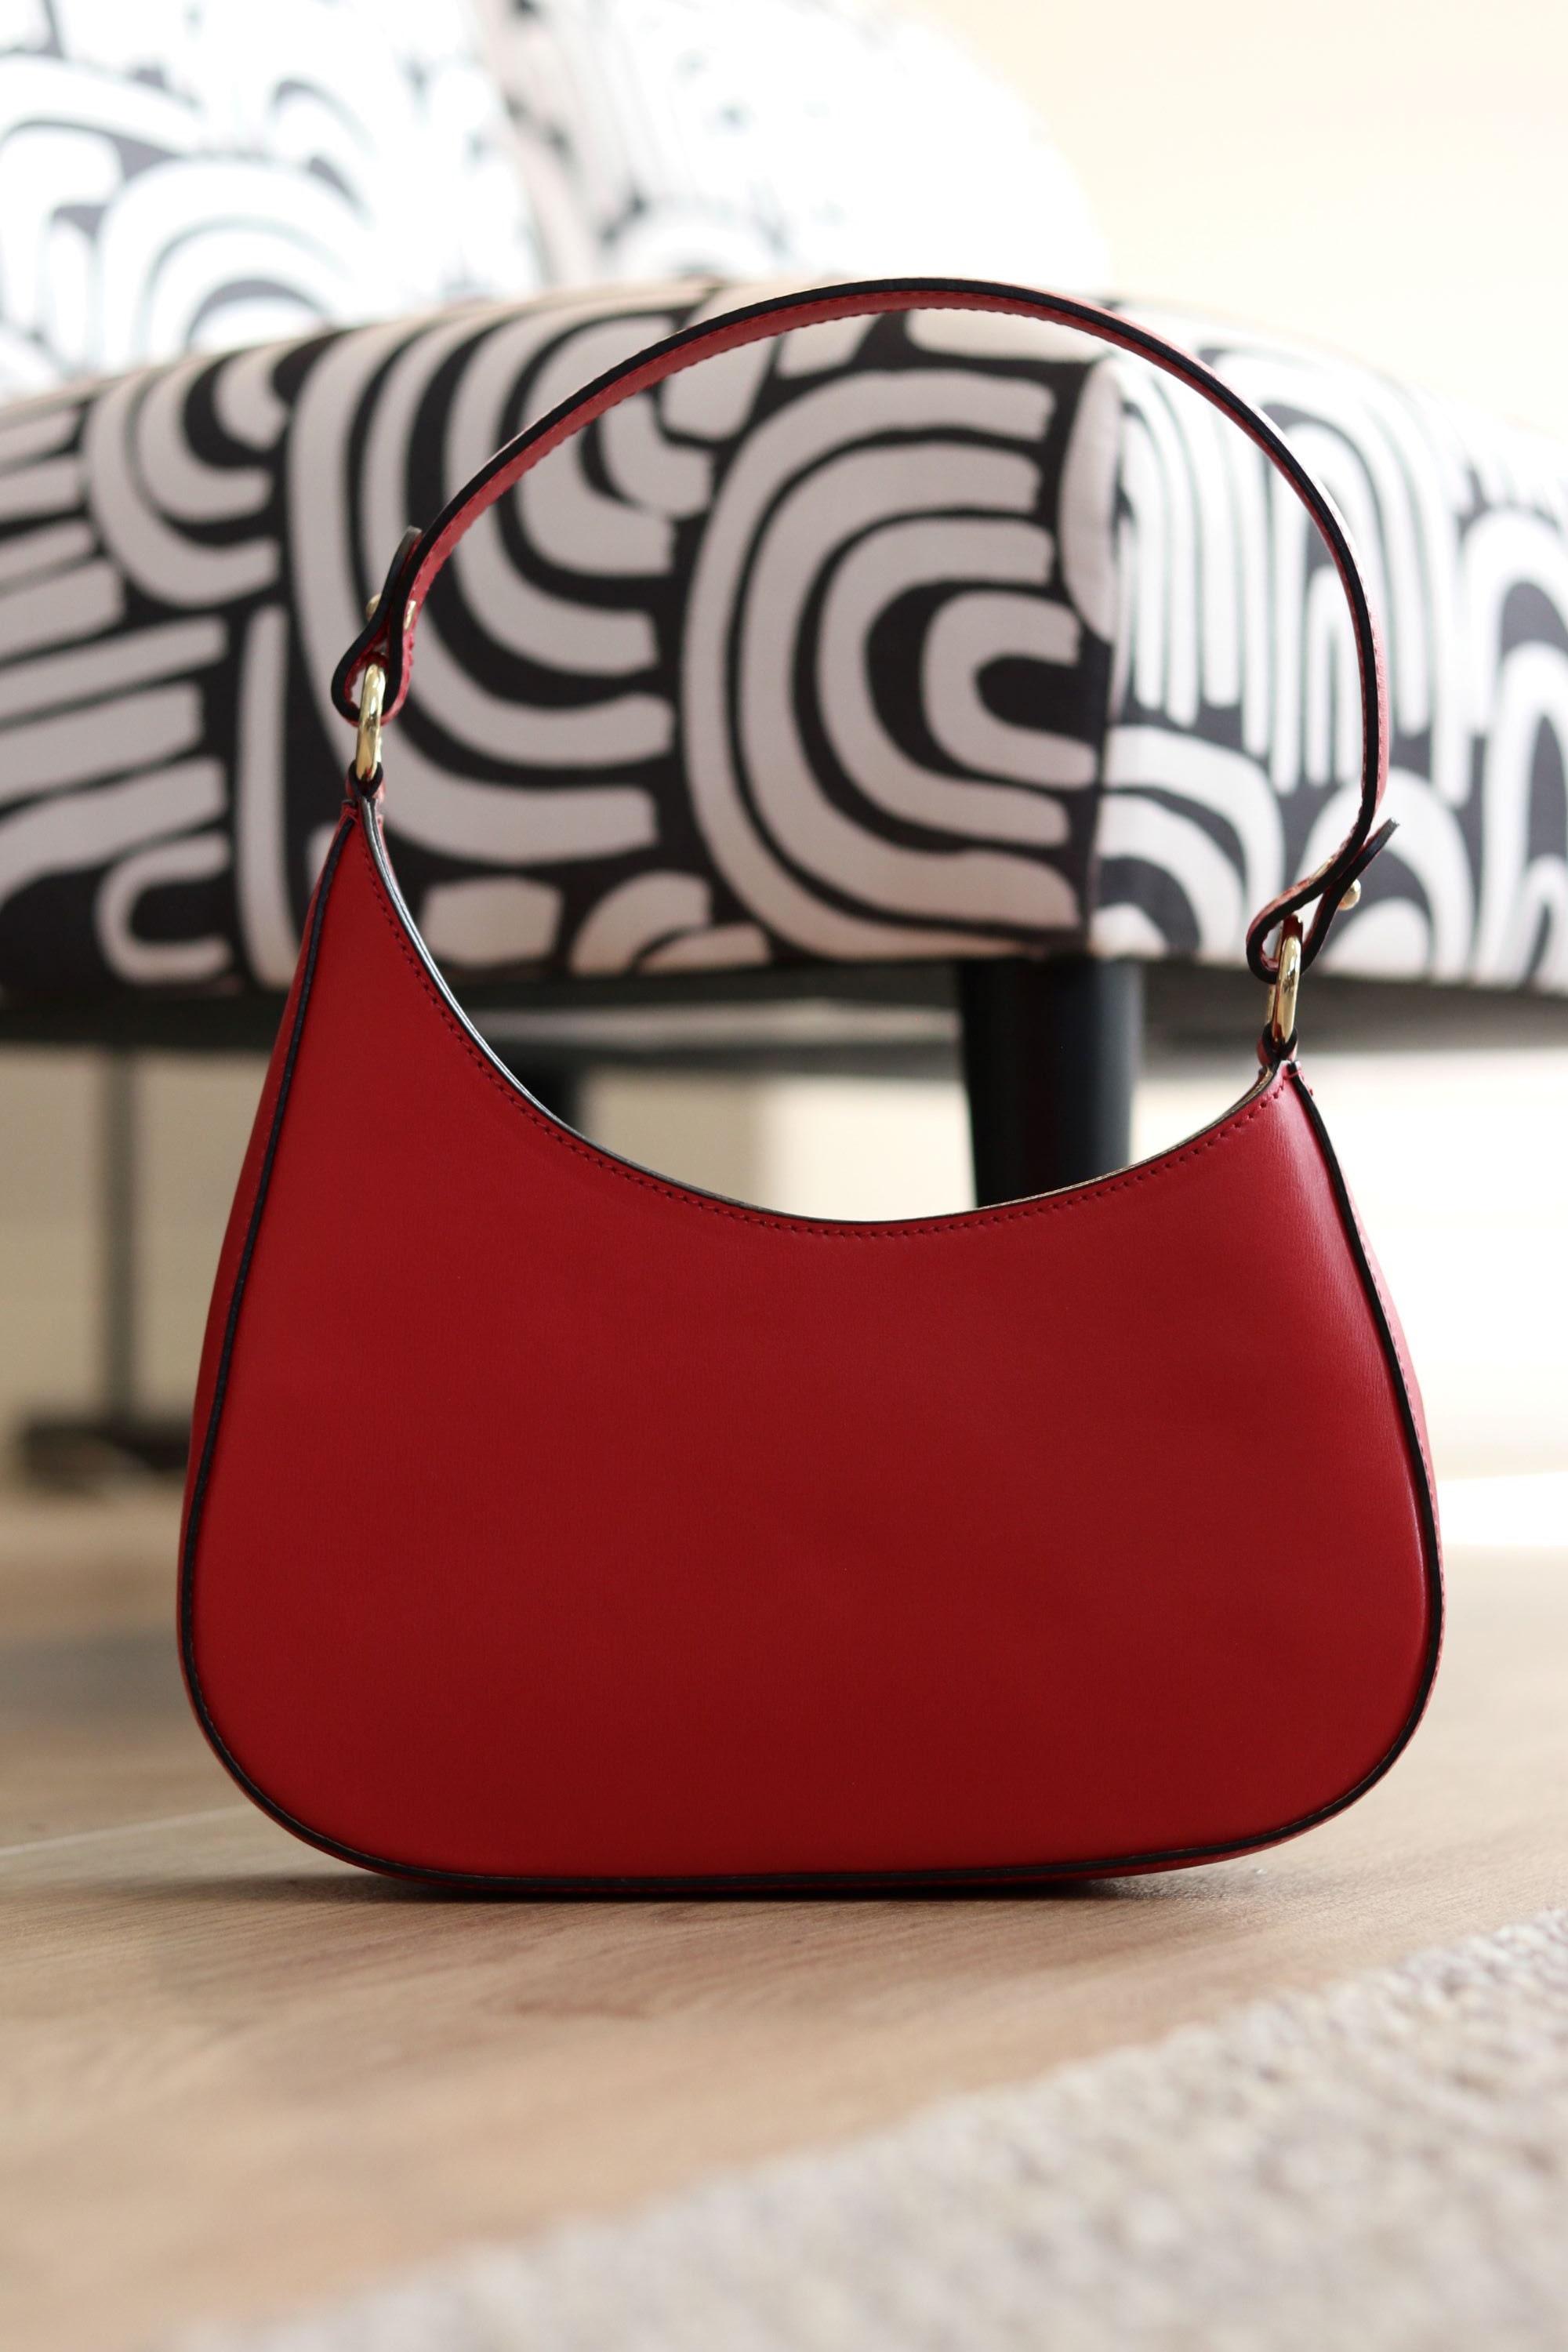 Italian Leather Bag Handbag Luna Made in Italy Women's 